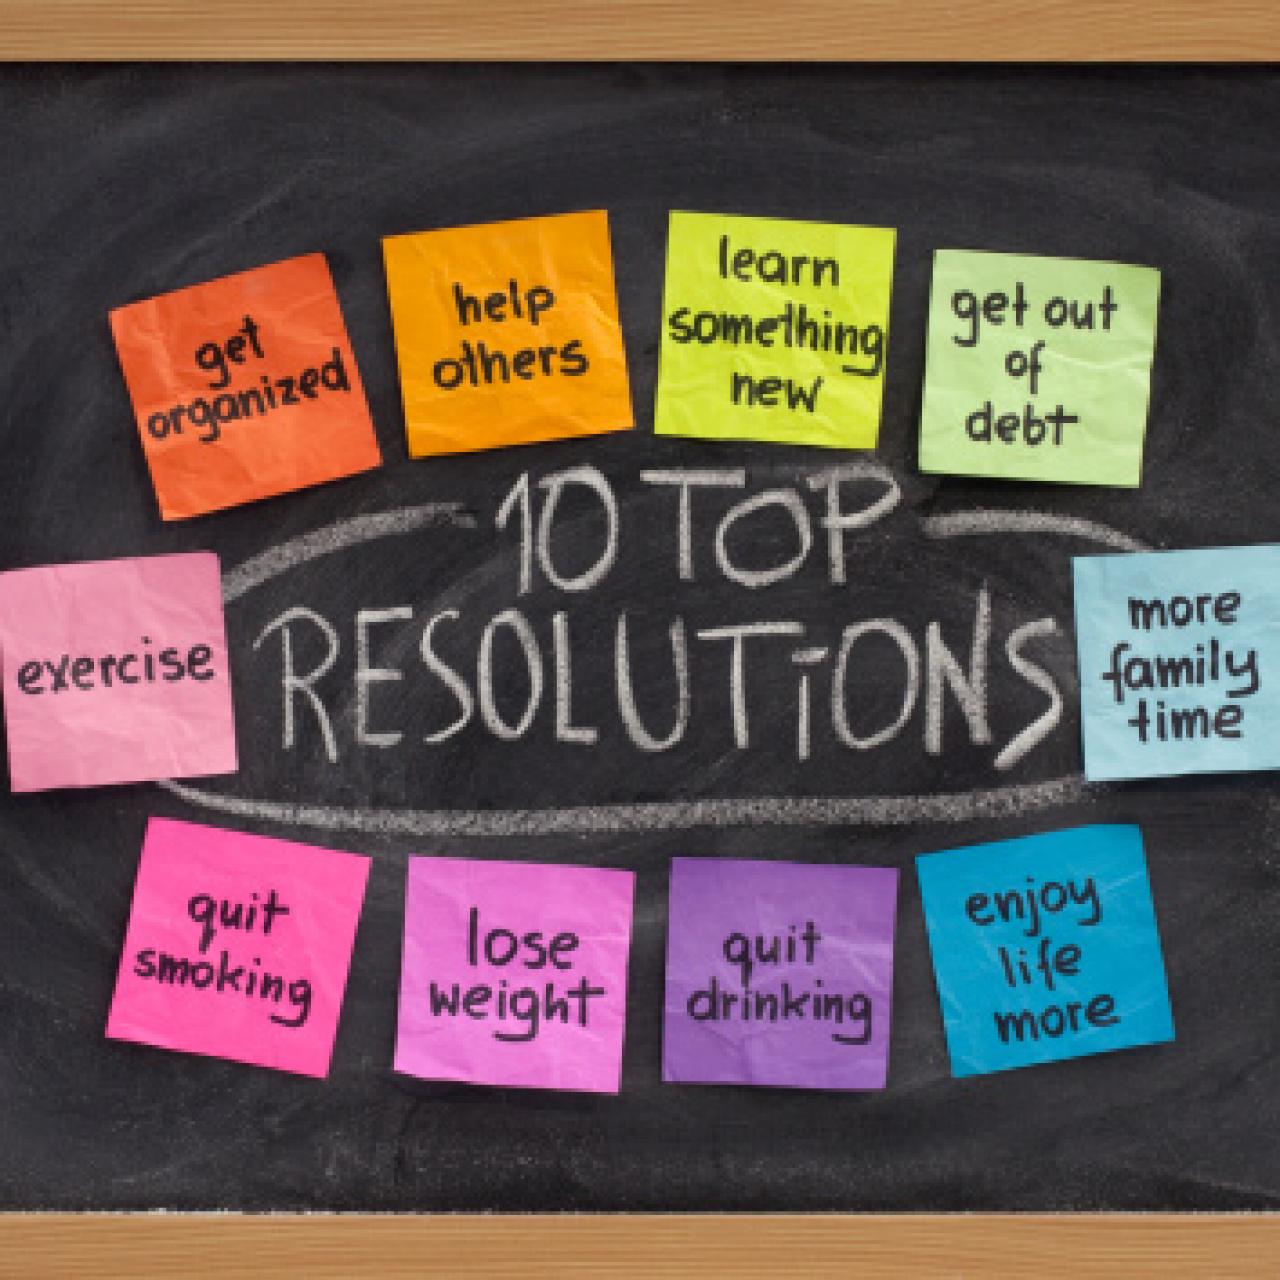 HeatsBox - New Year - new resolutions! 🌟 Planning to eat